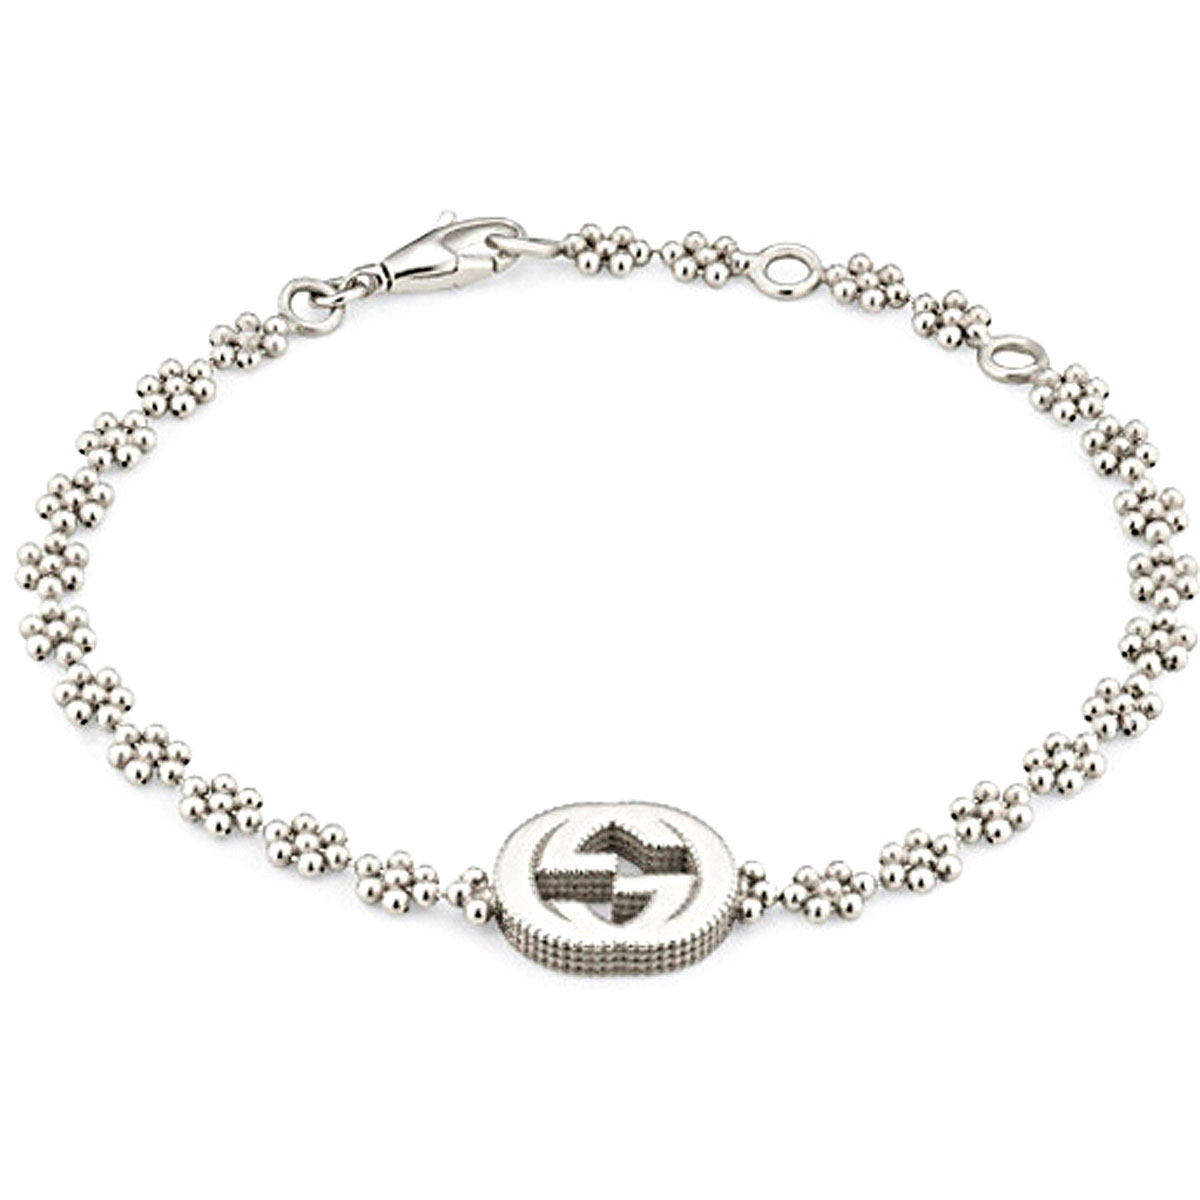 Gucci | Jewelry | Gucci Sterling Silver Marina Chain Link Bracelet |  Poshmark